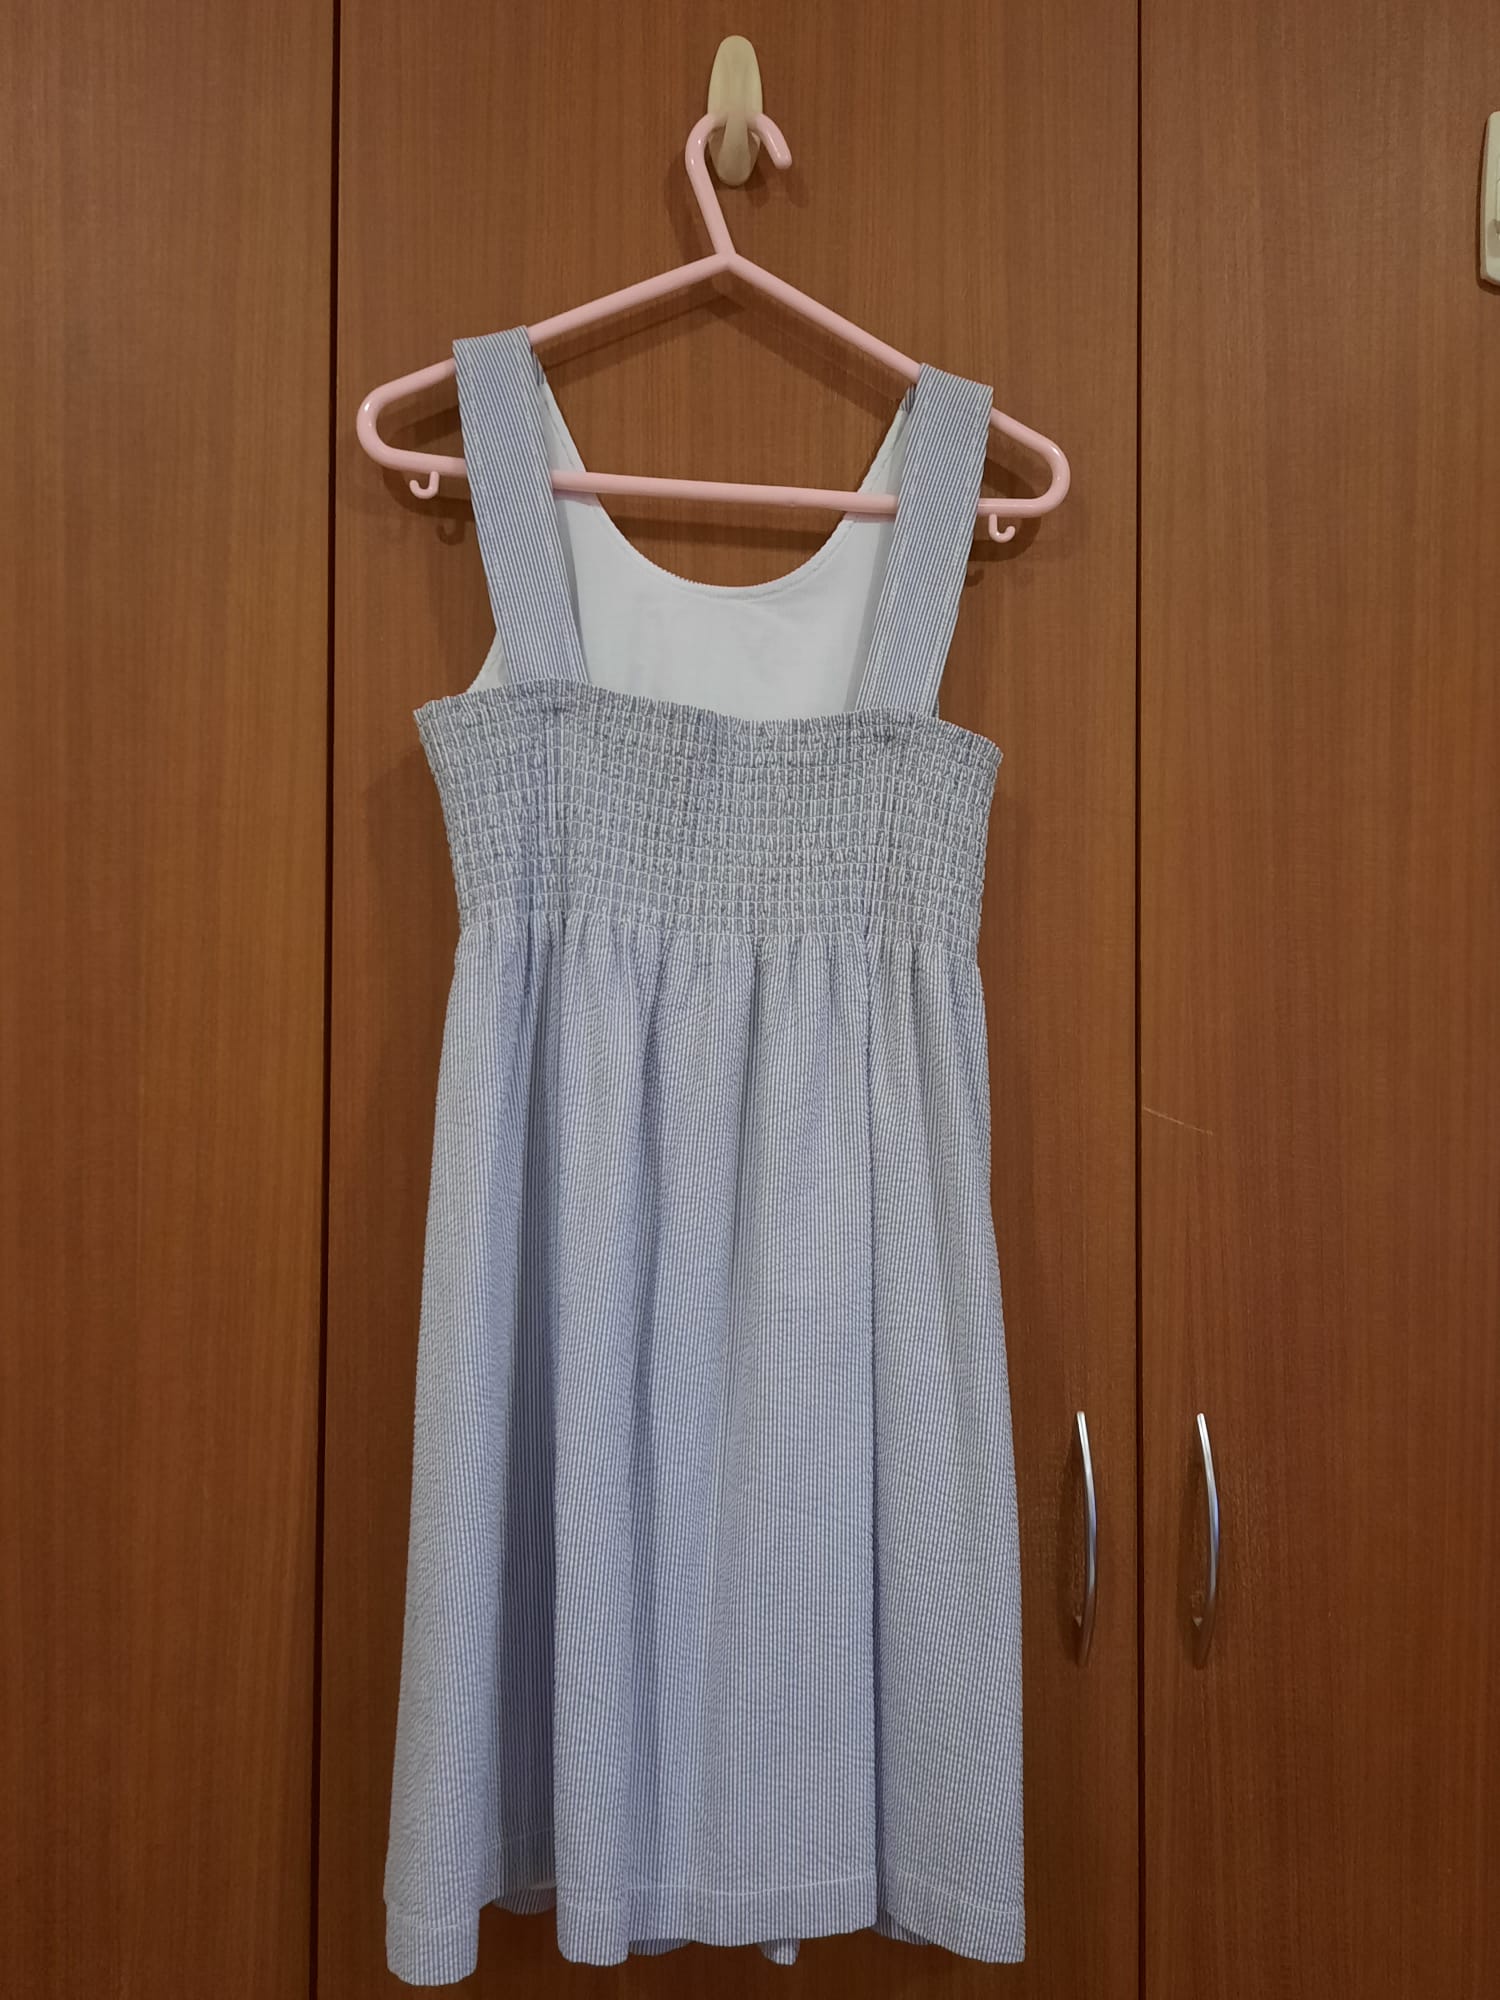 Blue & White Striped sleeveless dress 2.jpeg